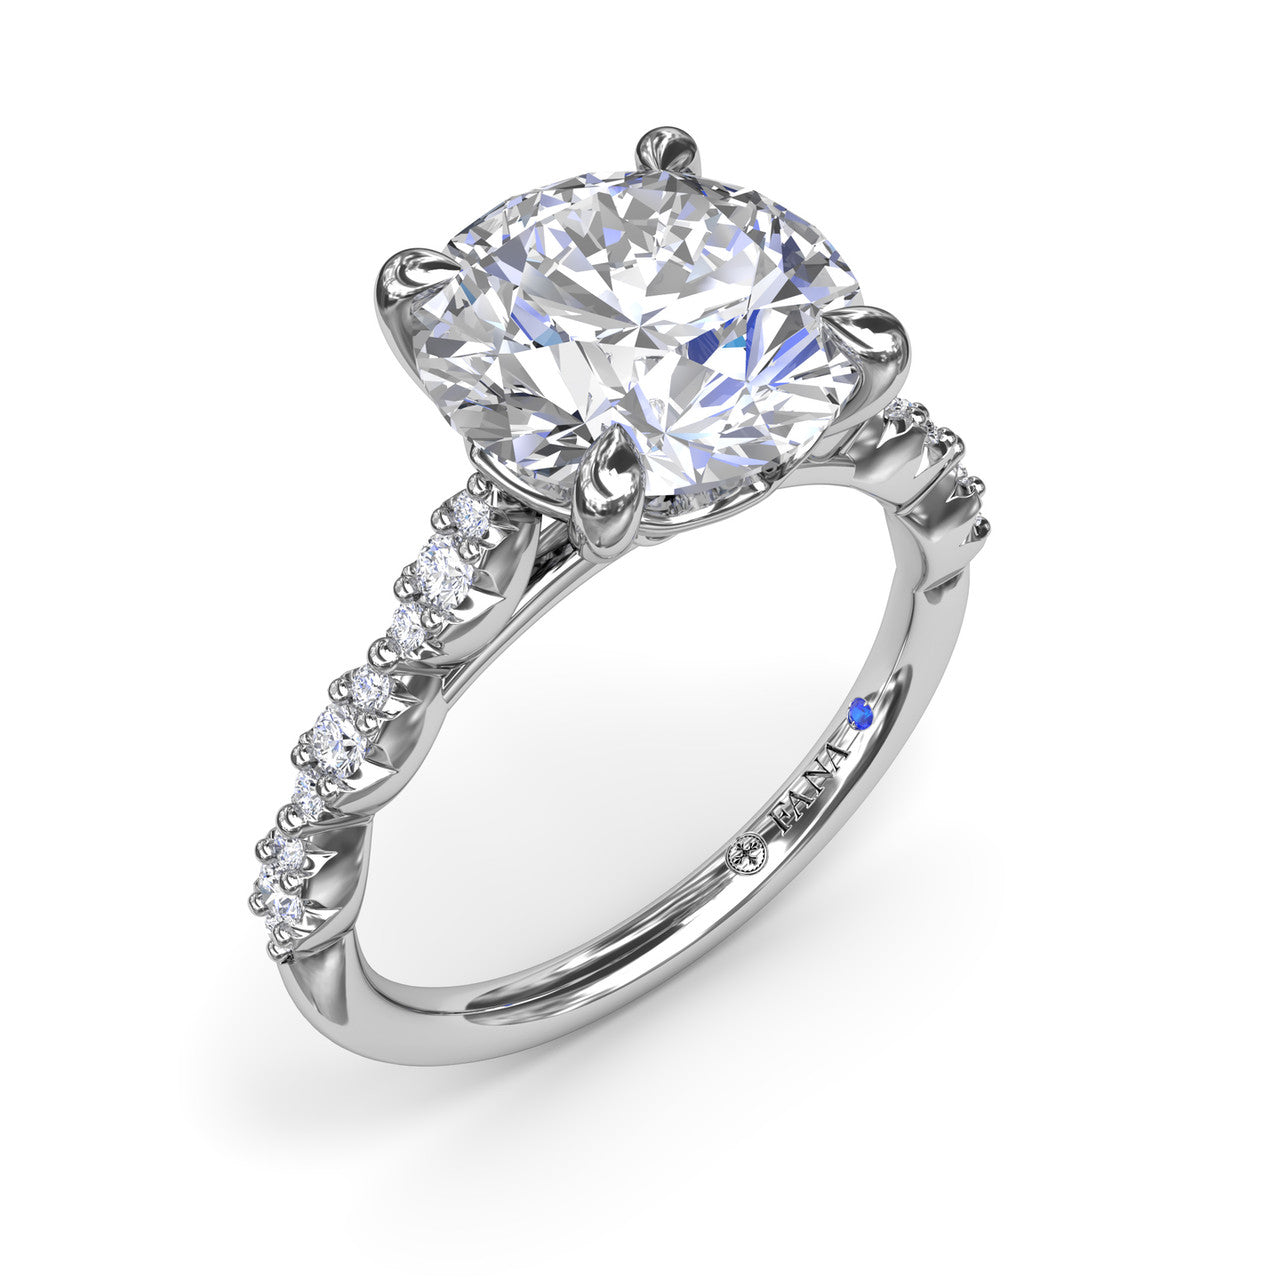 FANA 14 Karat Side Stones Diamond Engagement Ring S4199/WG